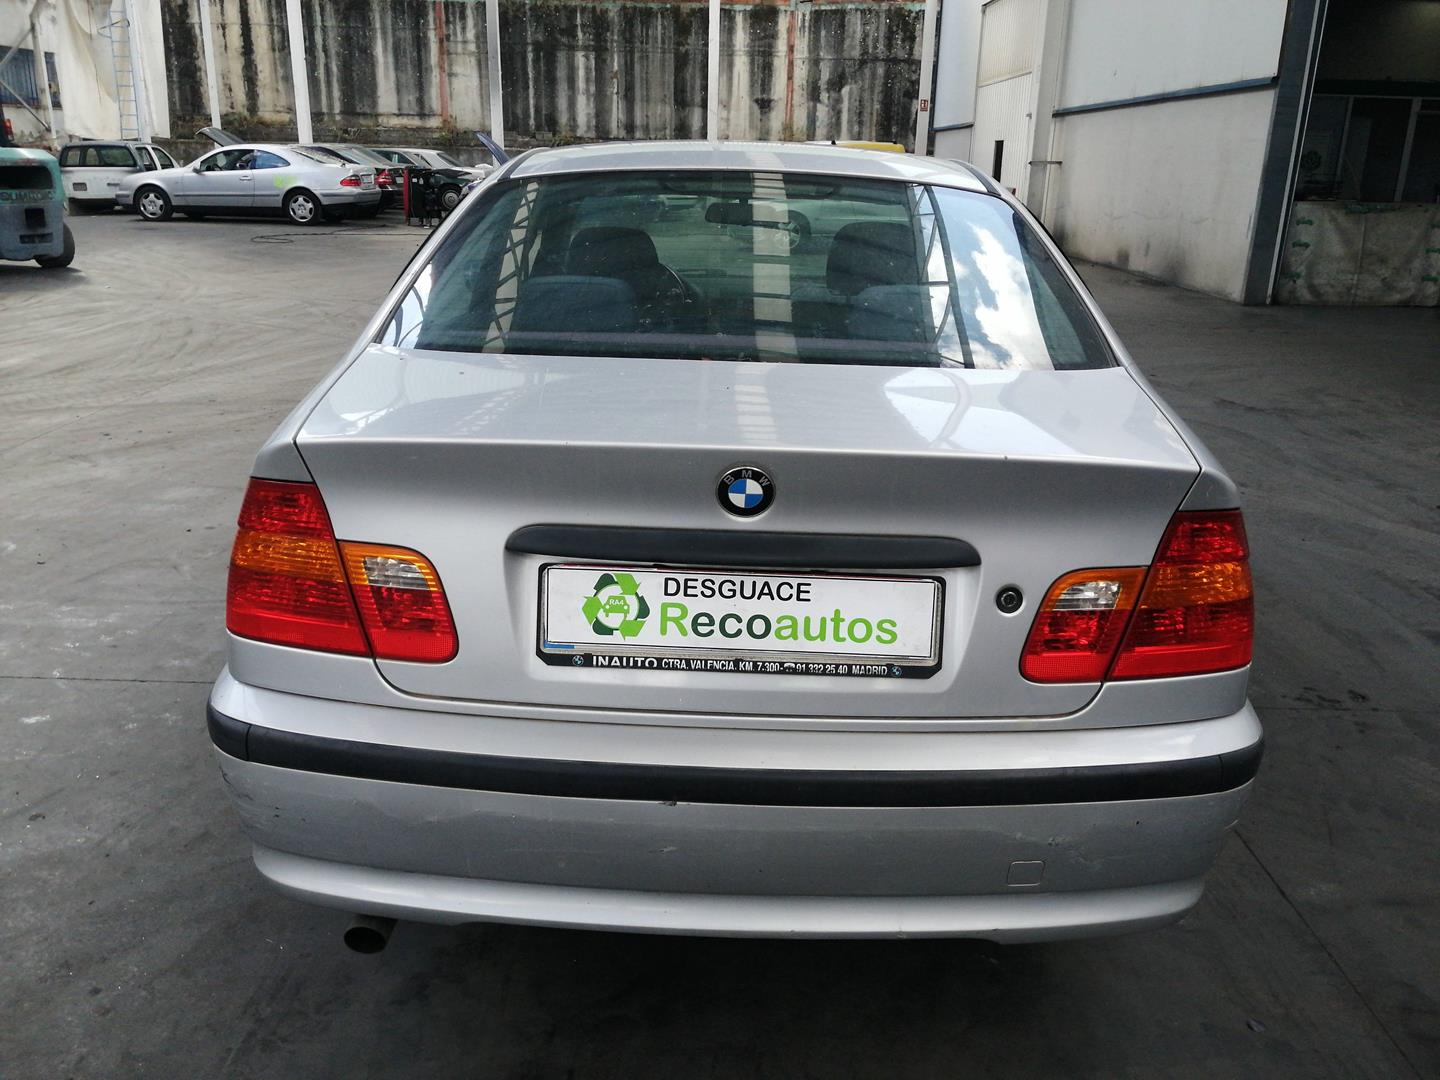 BMW 3 Series E36 (1990-2000) Other Control Units 7516809, 412265001001, SIEMENSVDO 21120606